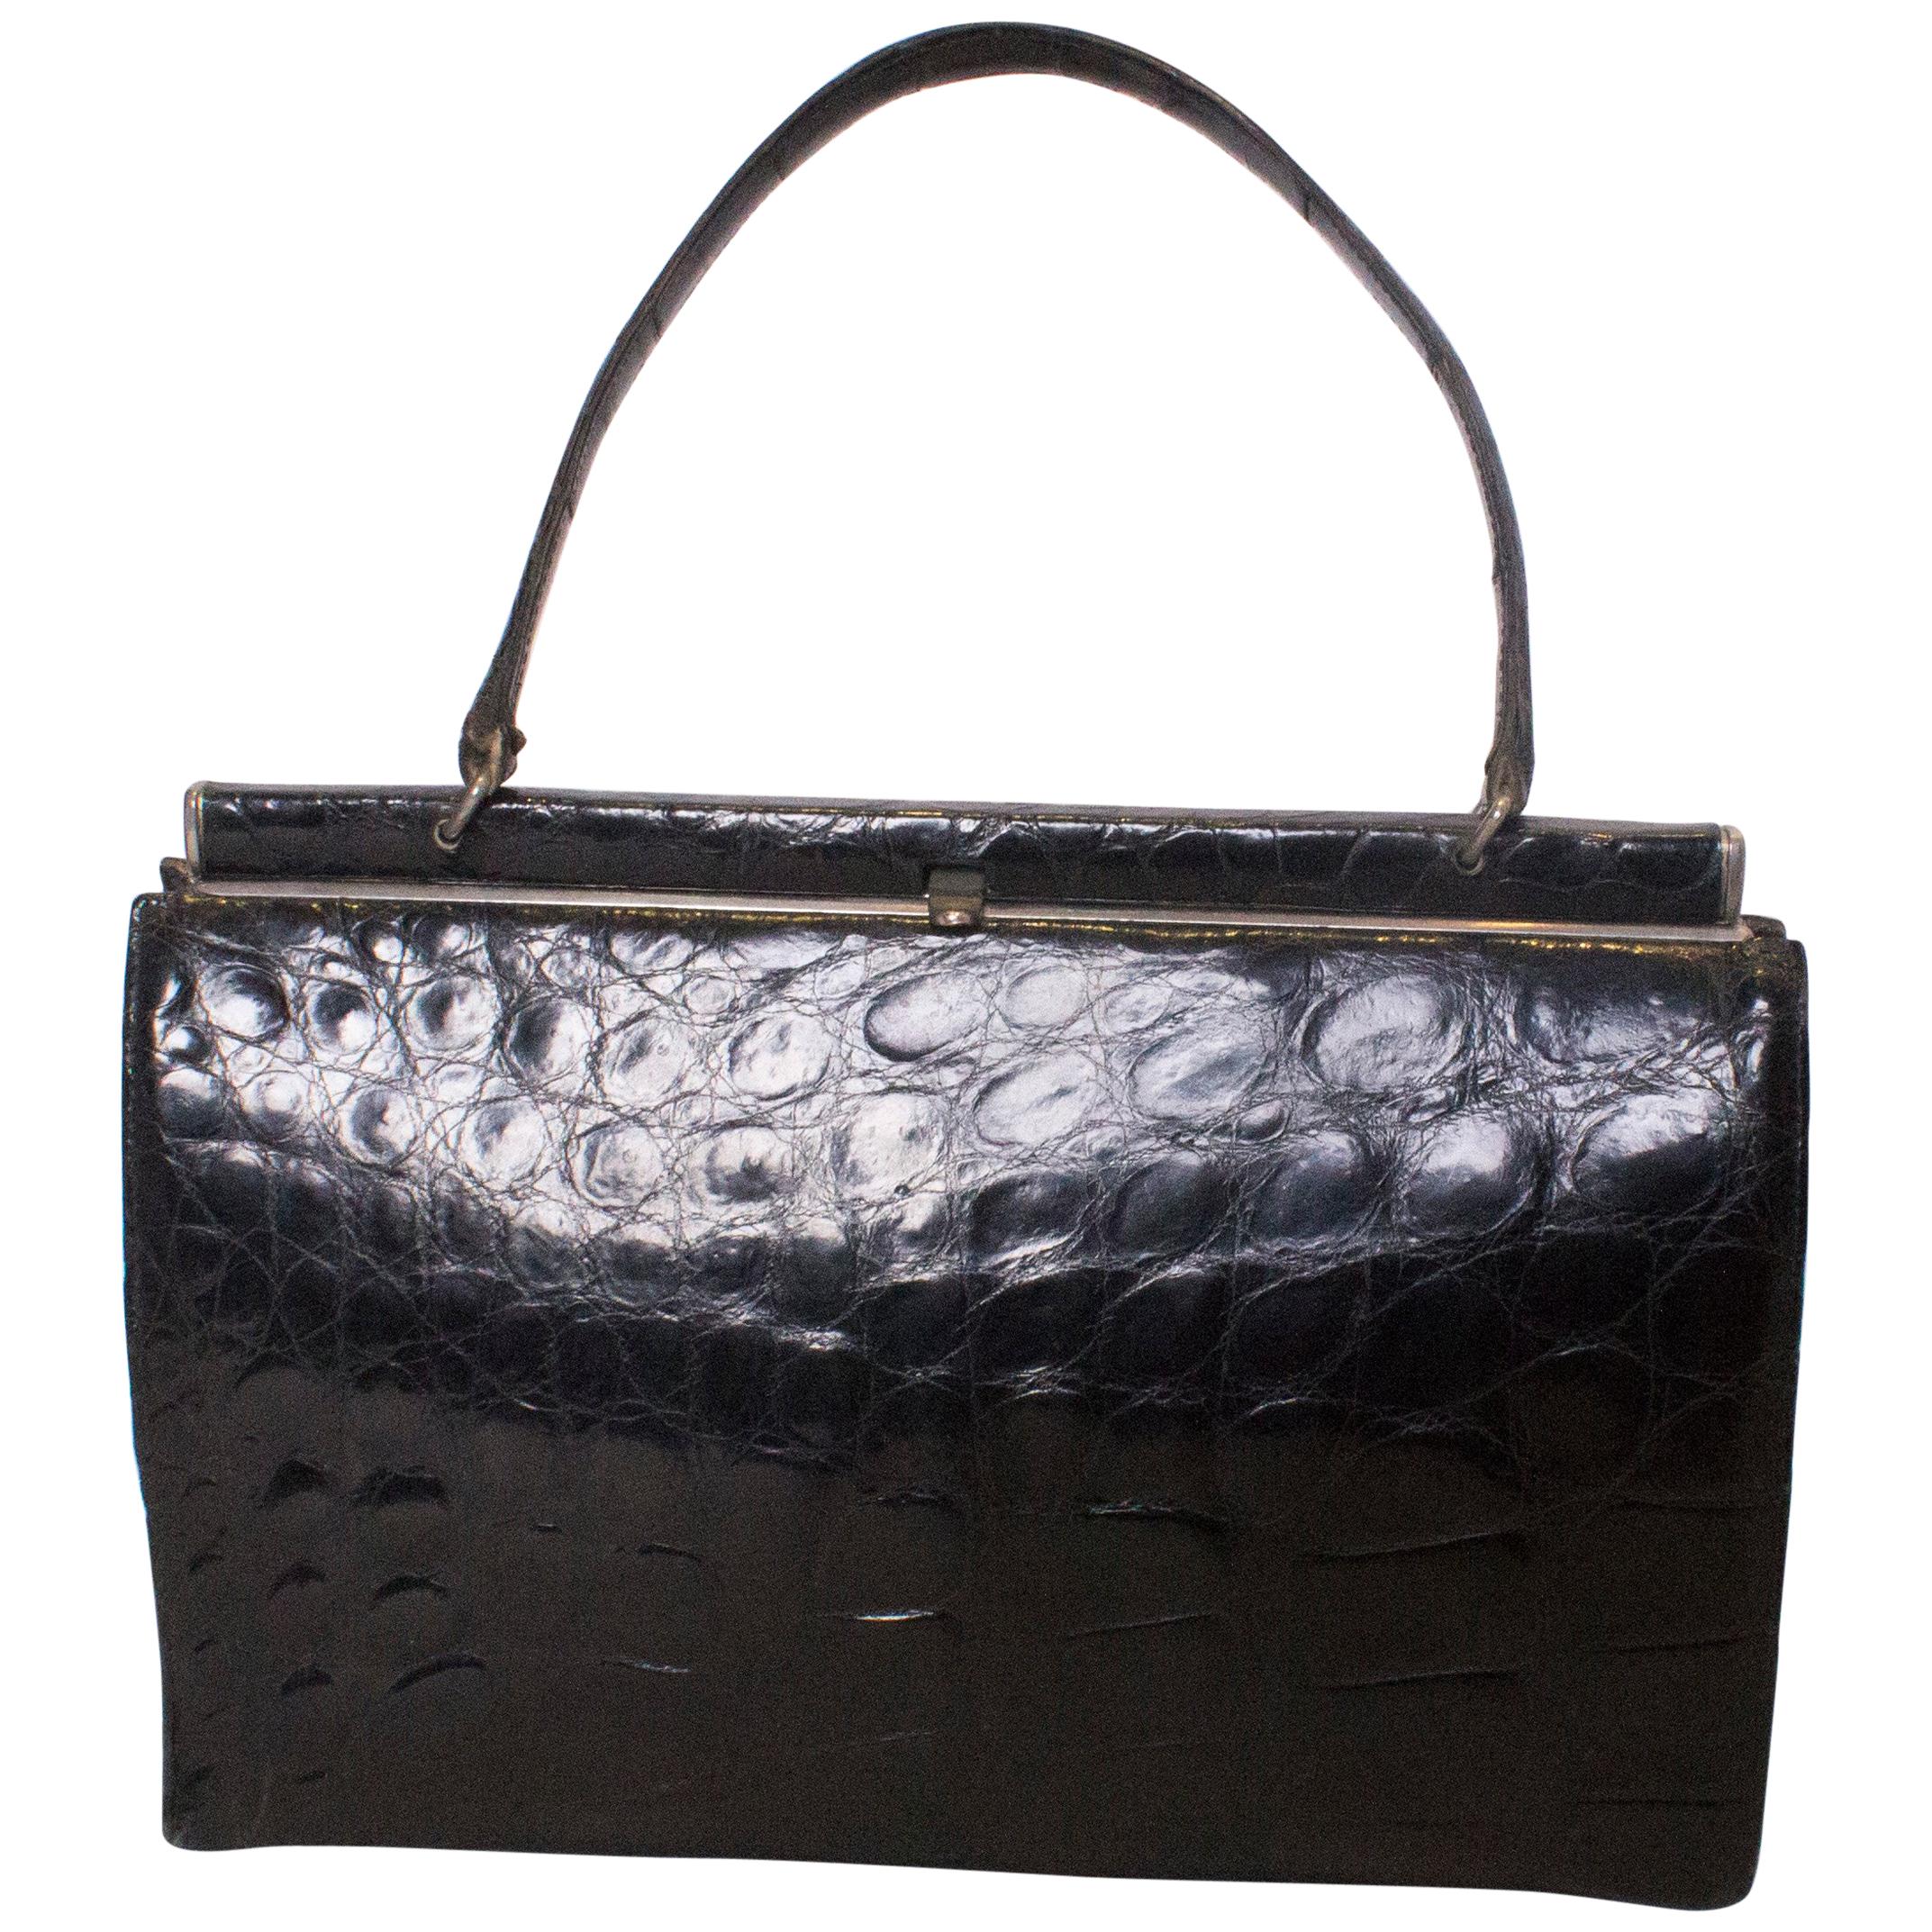 Vintage Clutch Bag Hahepo Shoulder Bag Crocodile Pattern Leather Forearm Package Leather Handbags Small Messenger Handbag Handbags Baguette 